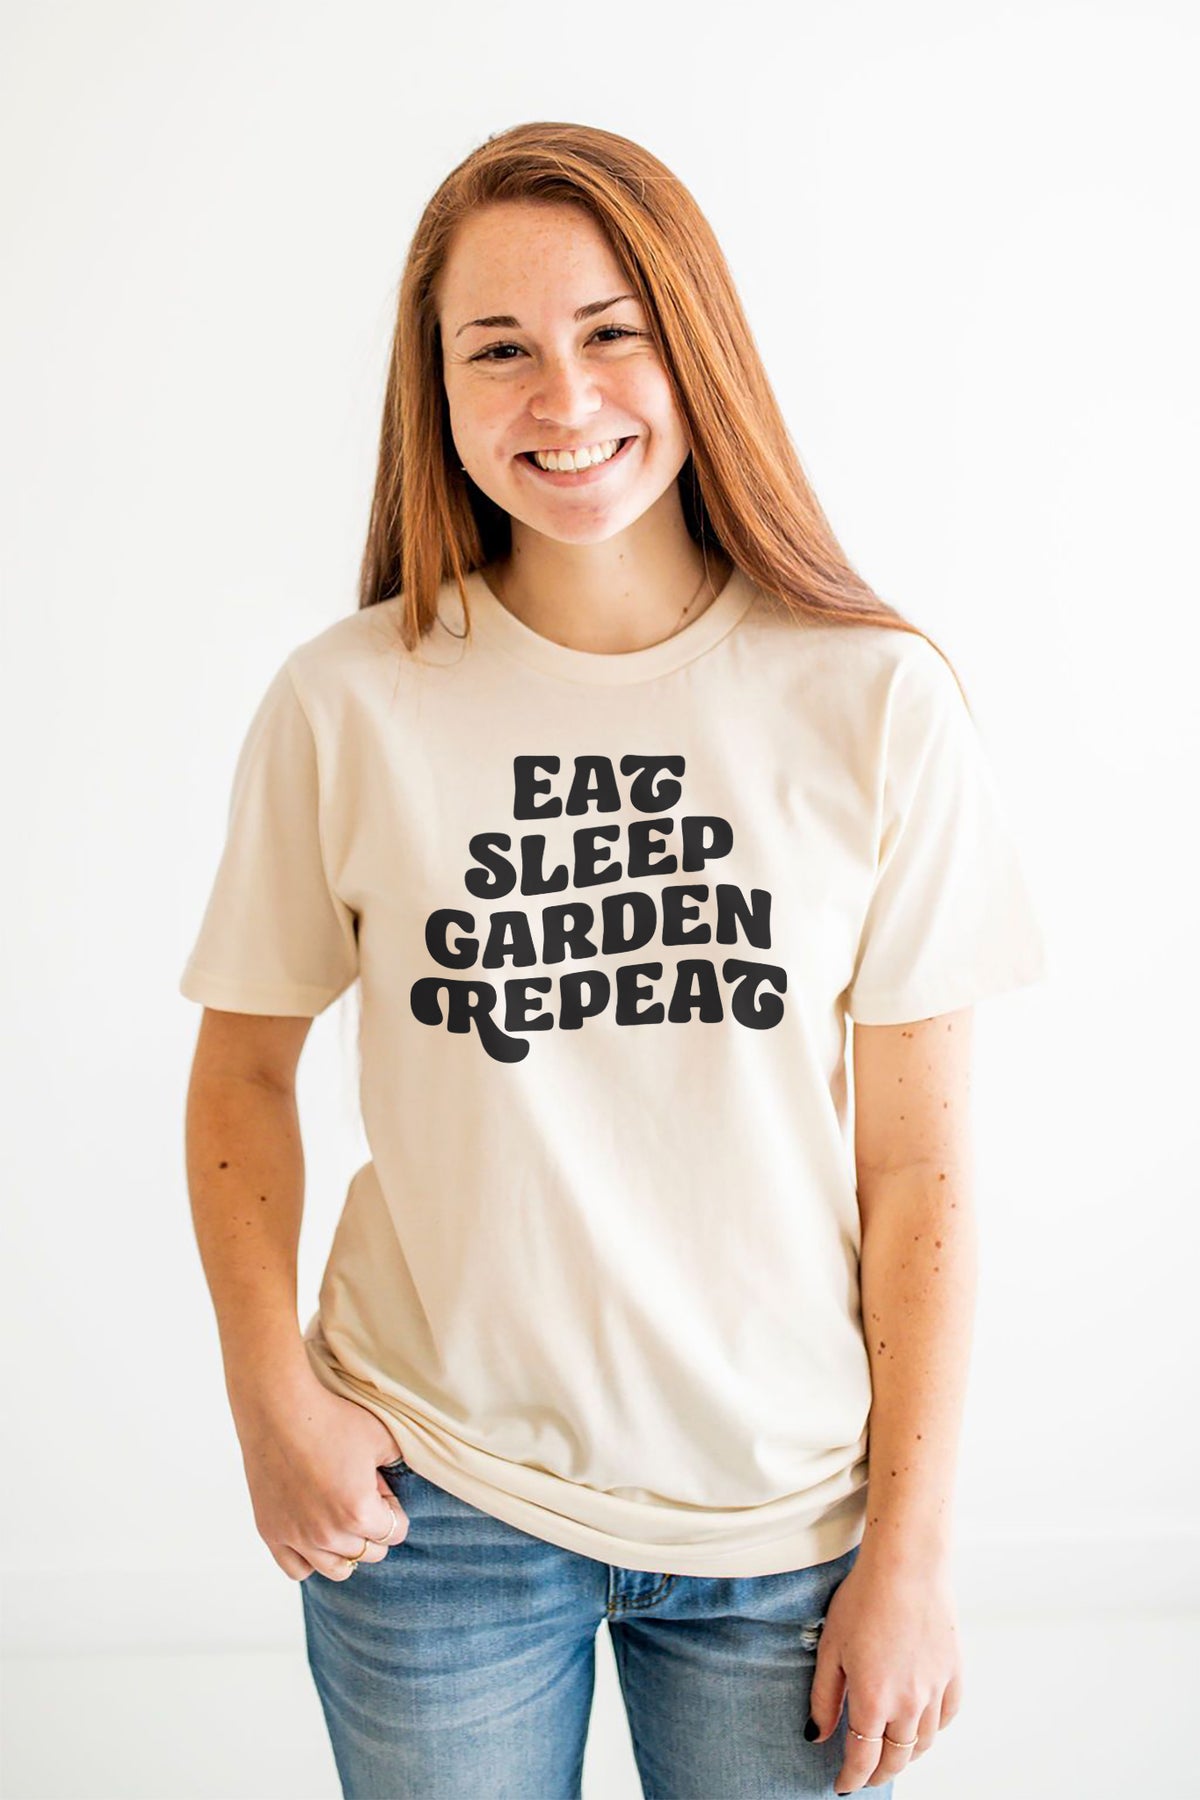 Eat, Sleep, Garden, Repeat Shirt